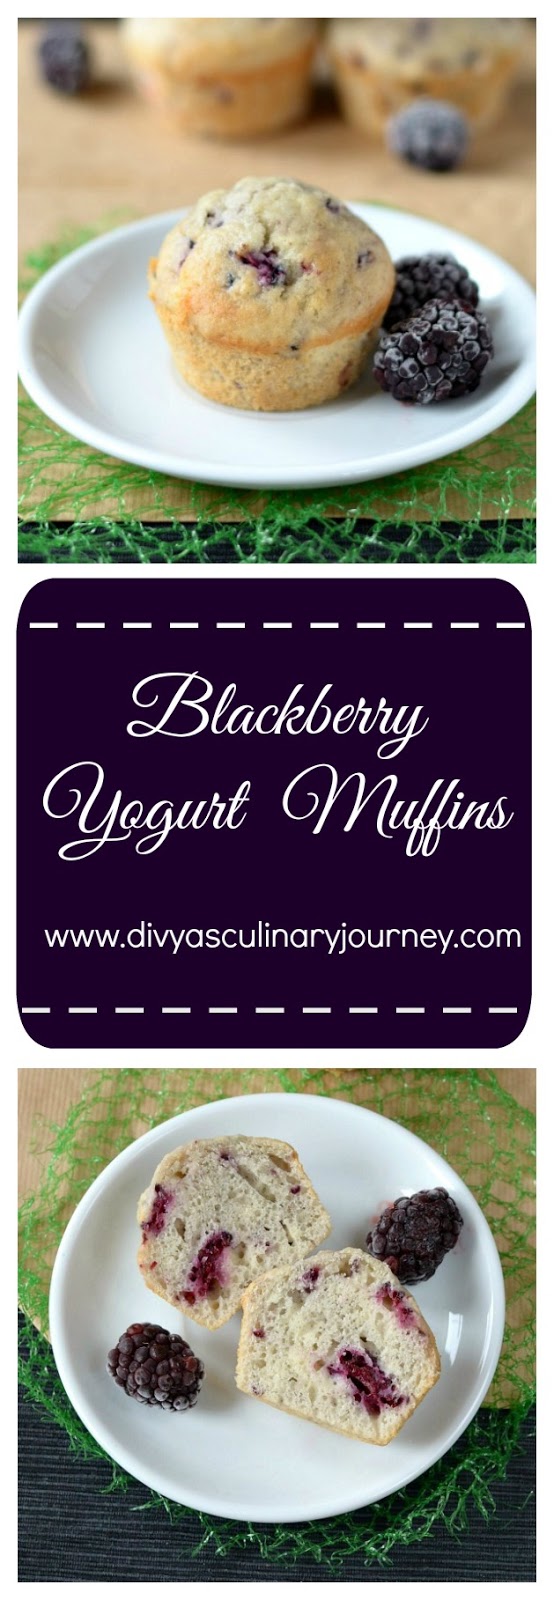 blackberry yogurt muffins, blackberry muffins with yogurt